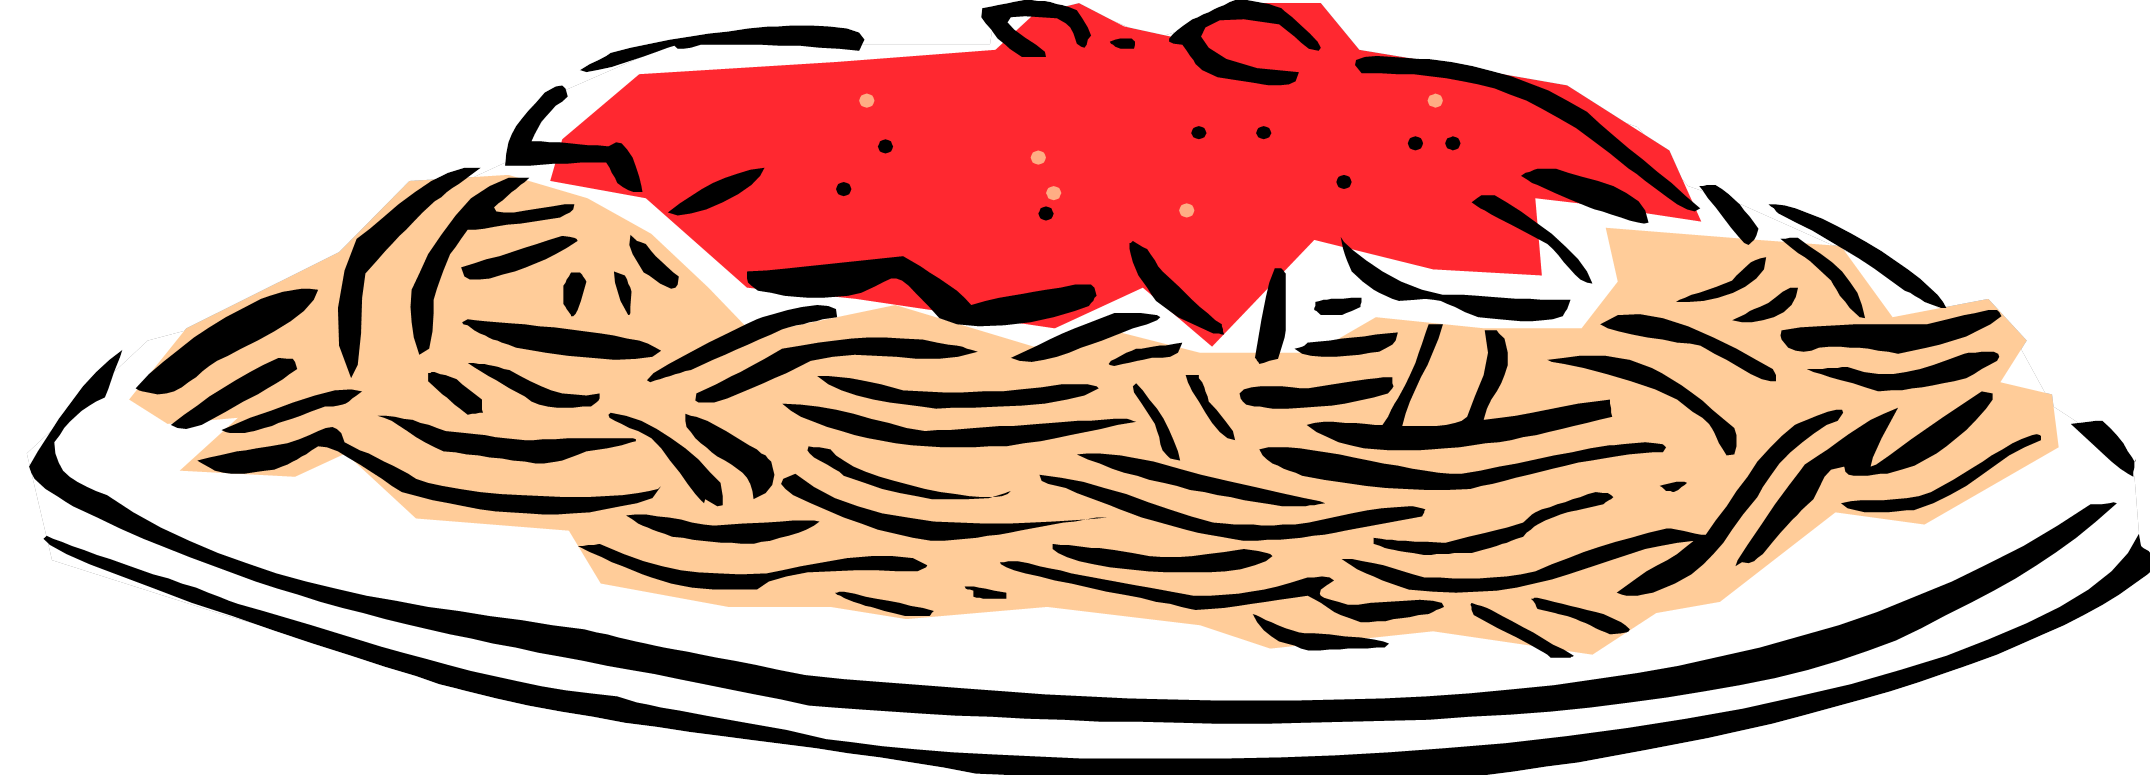 Spaghetti Cartoon Download - ClipArt Best